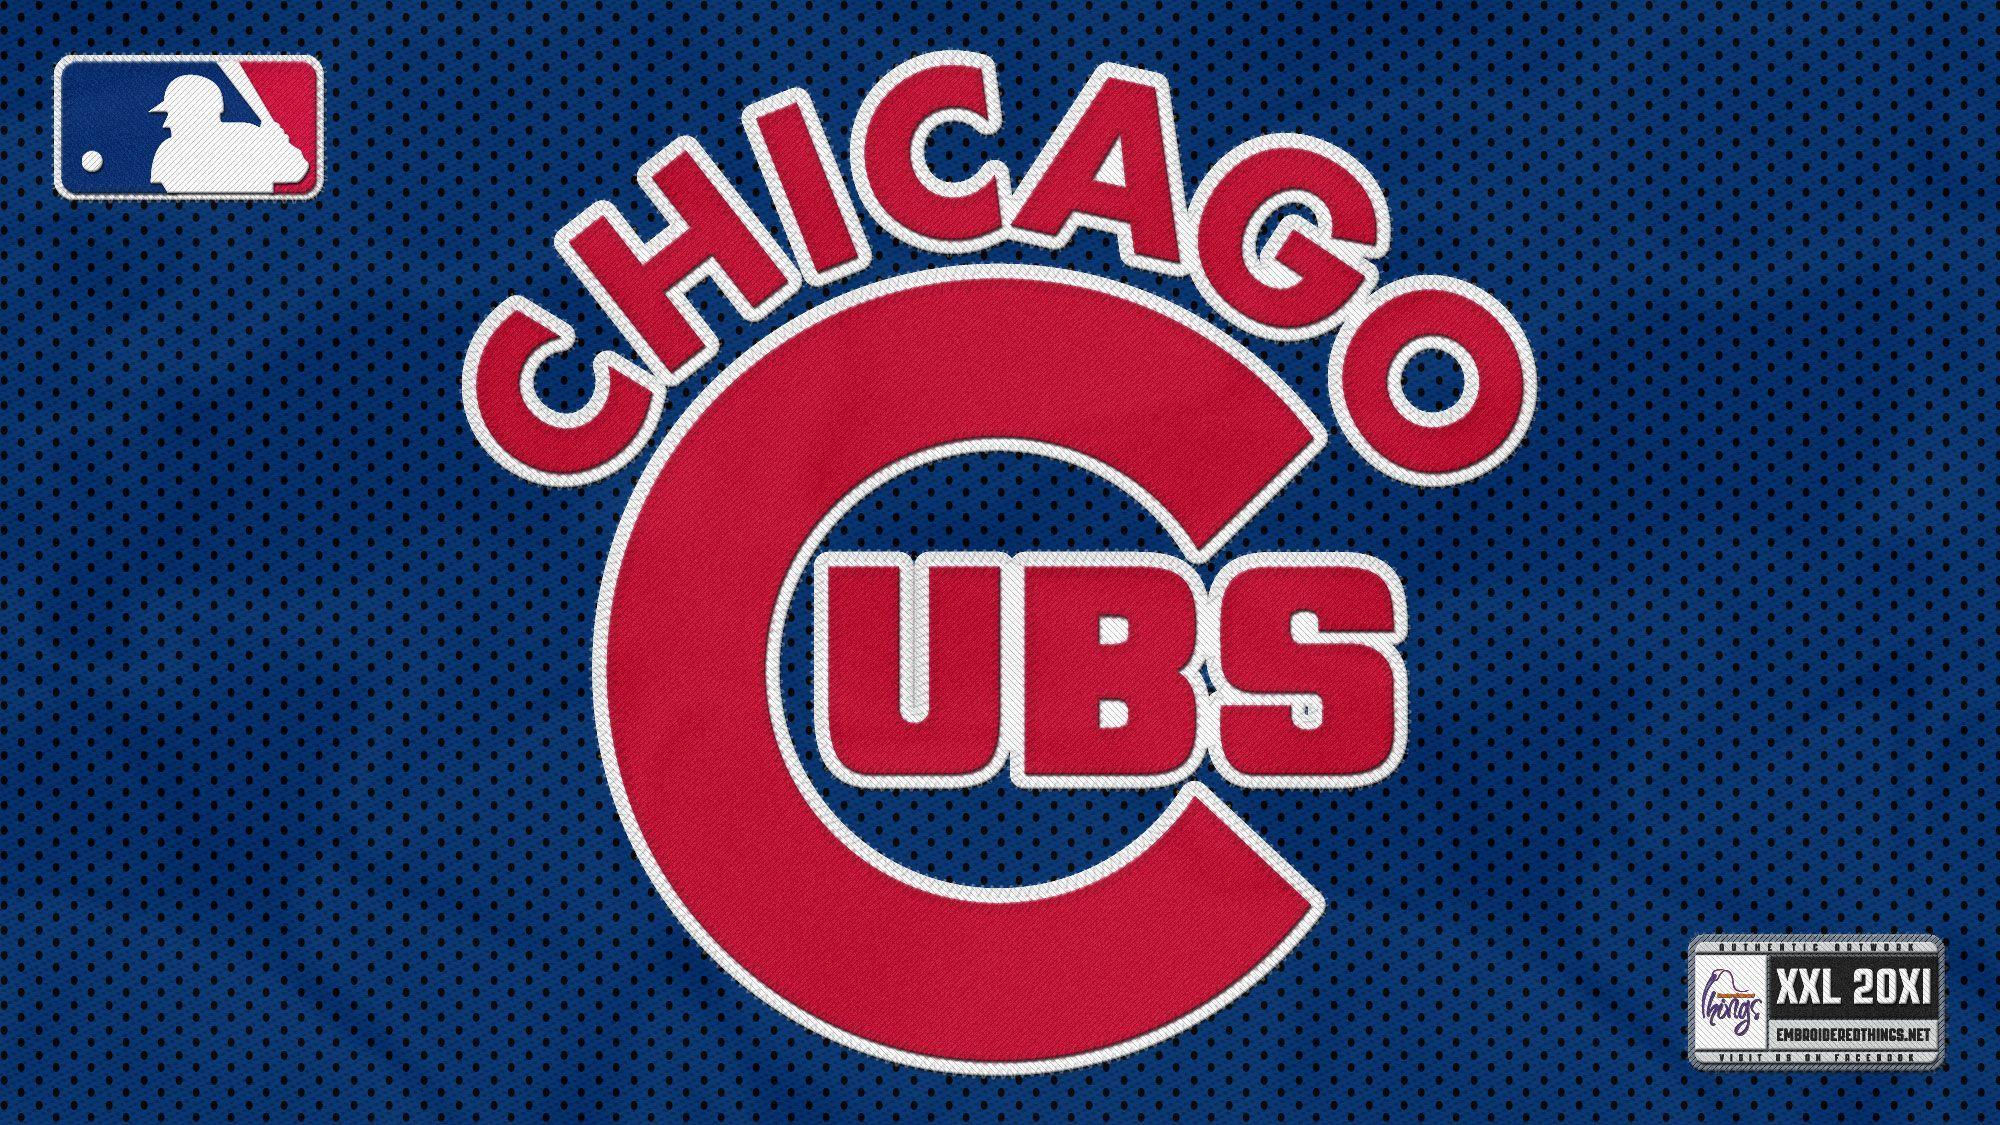 Chicago Cubs News